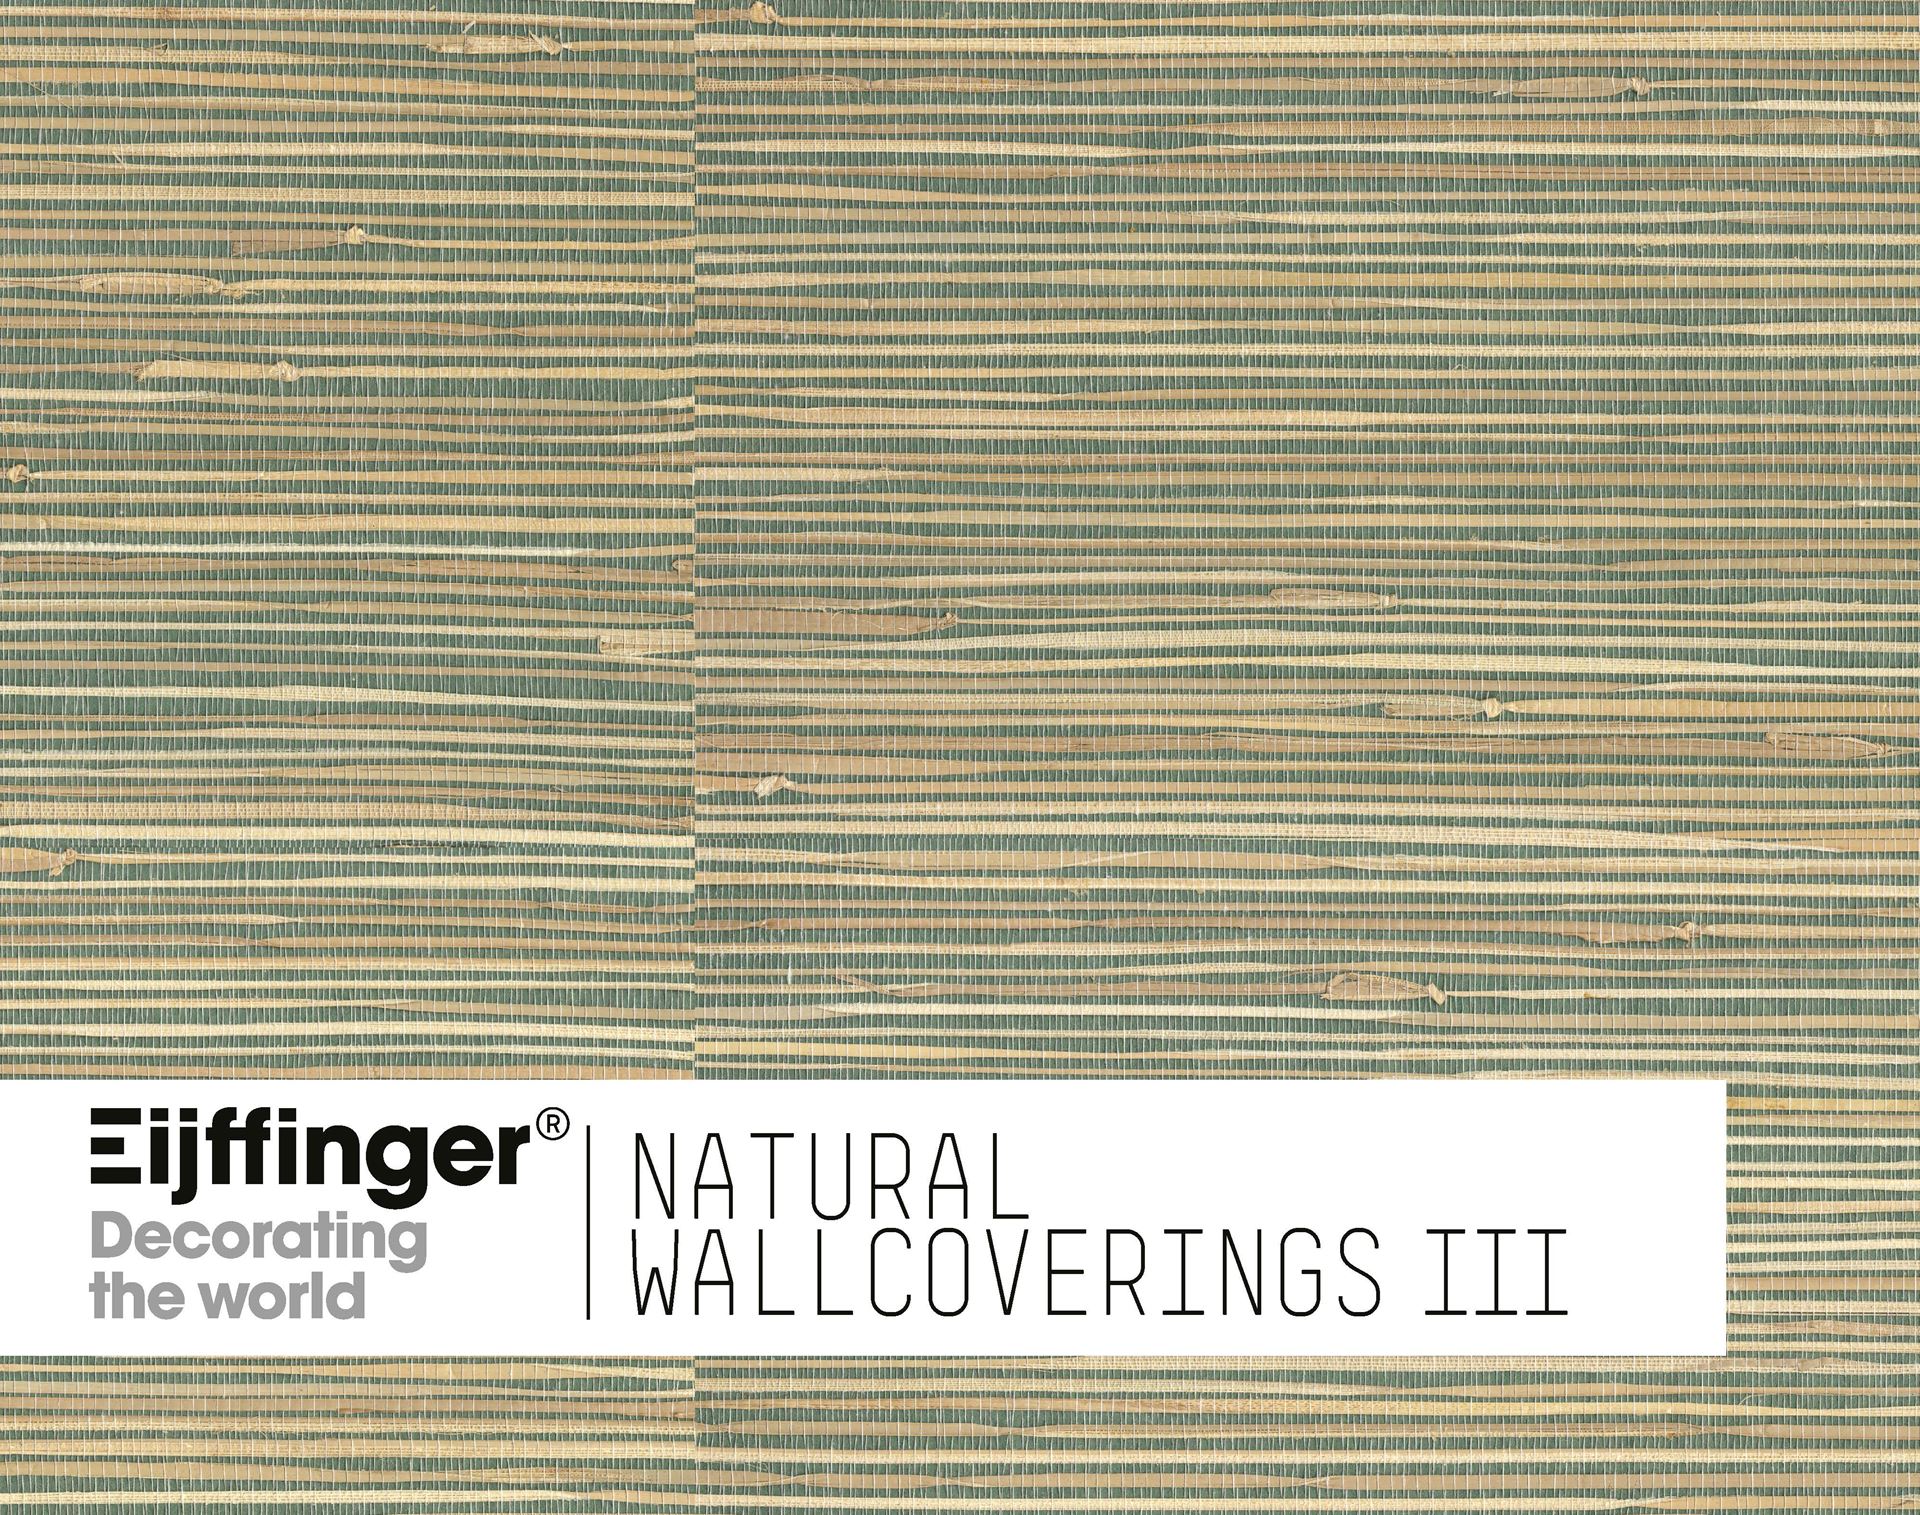 Wallpaper - Natural Wallcoverings III